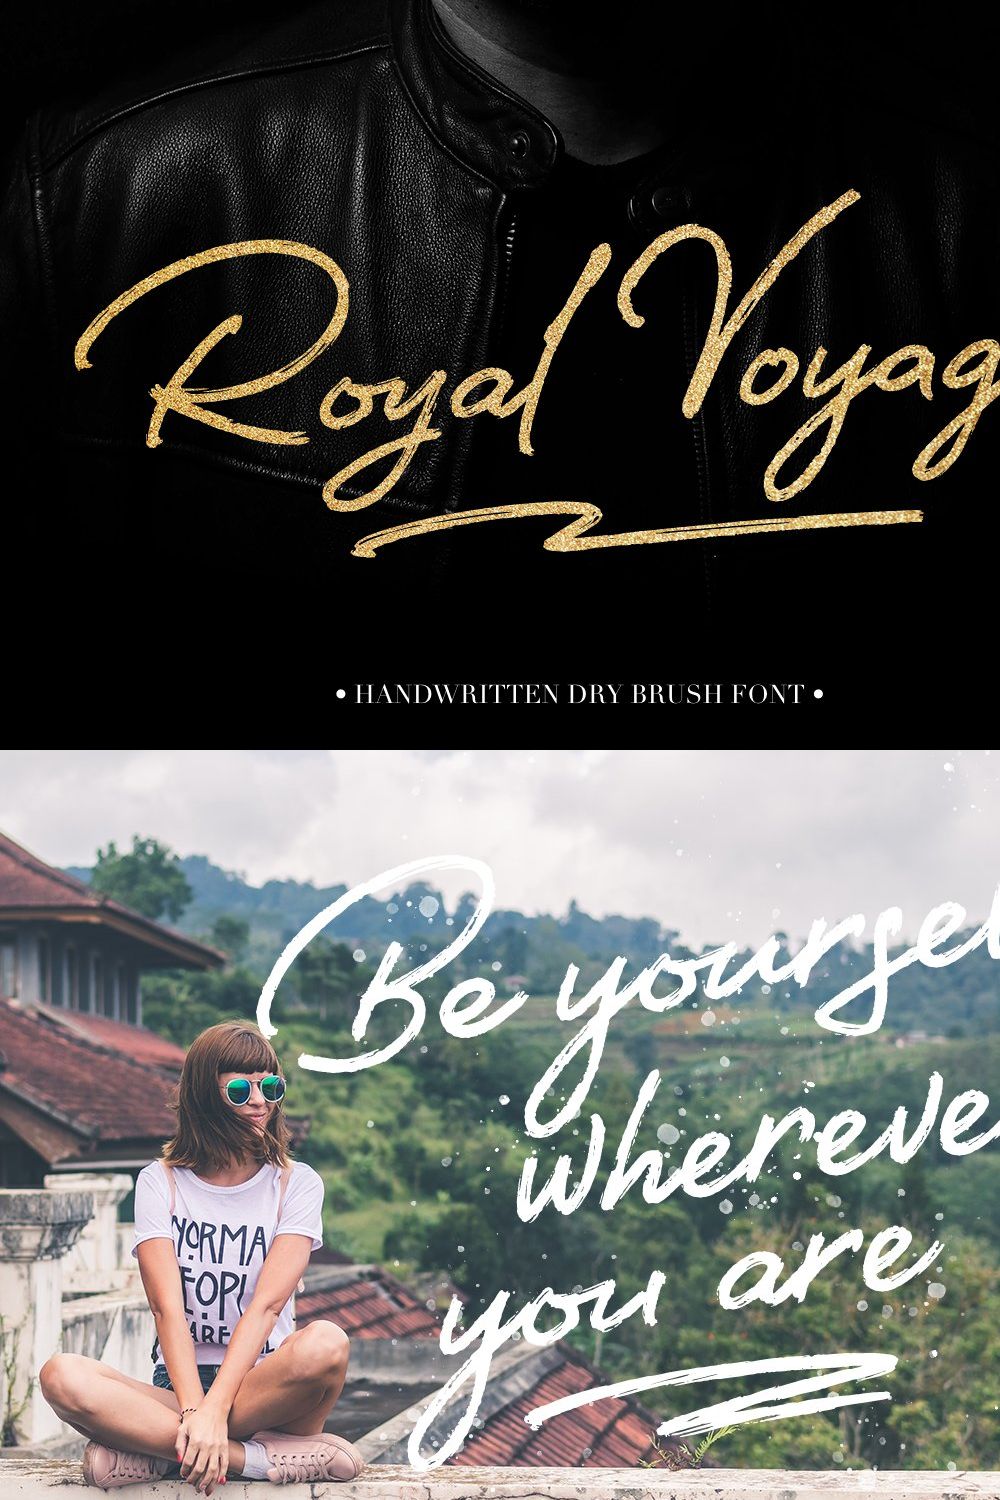 Royal Voyage pinterest preview image.